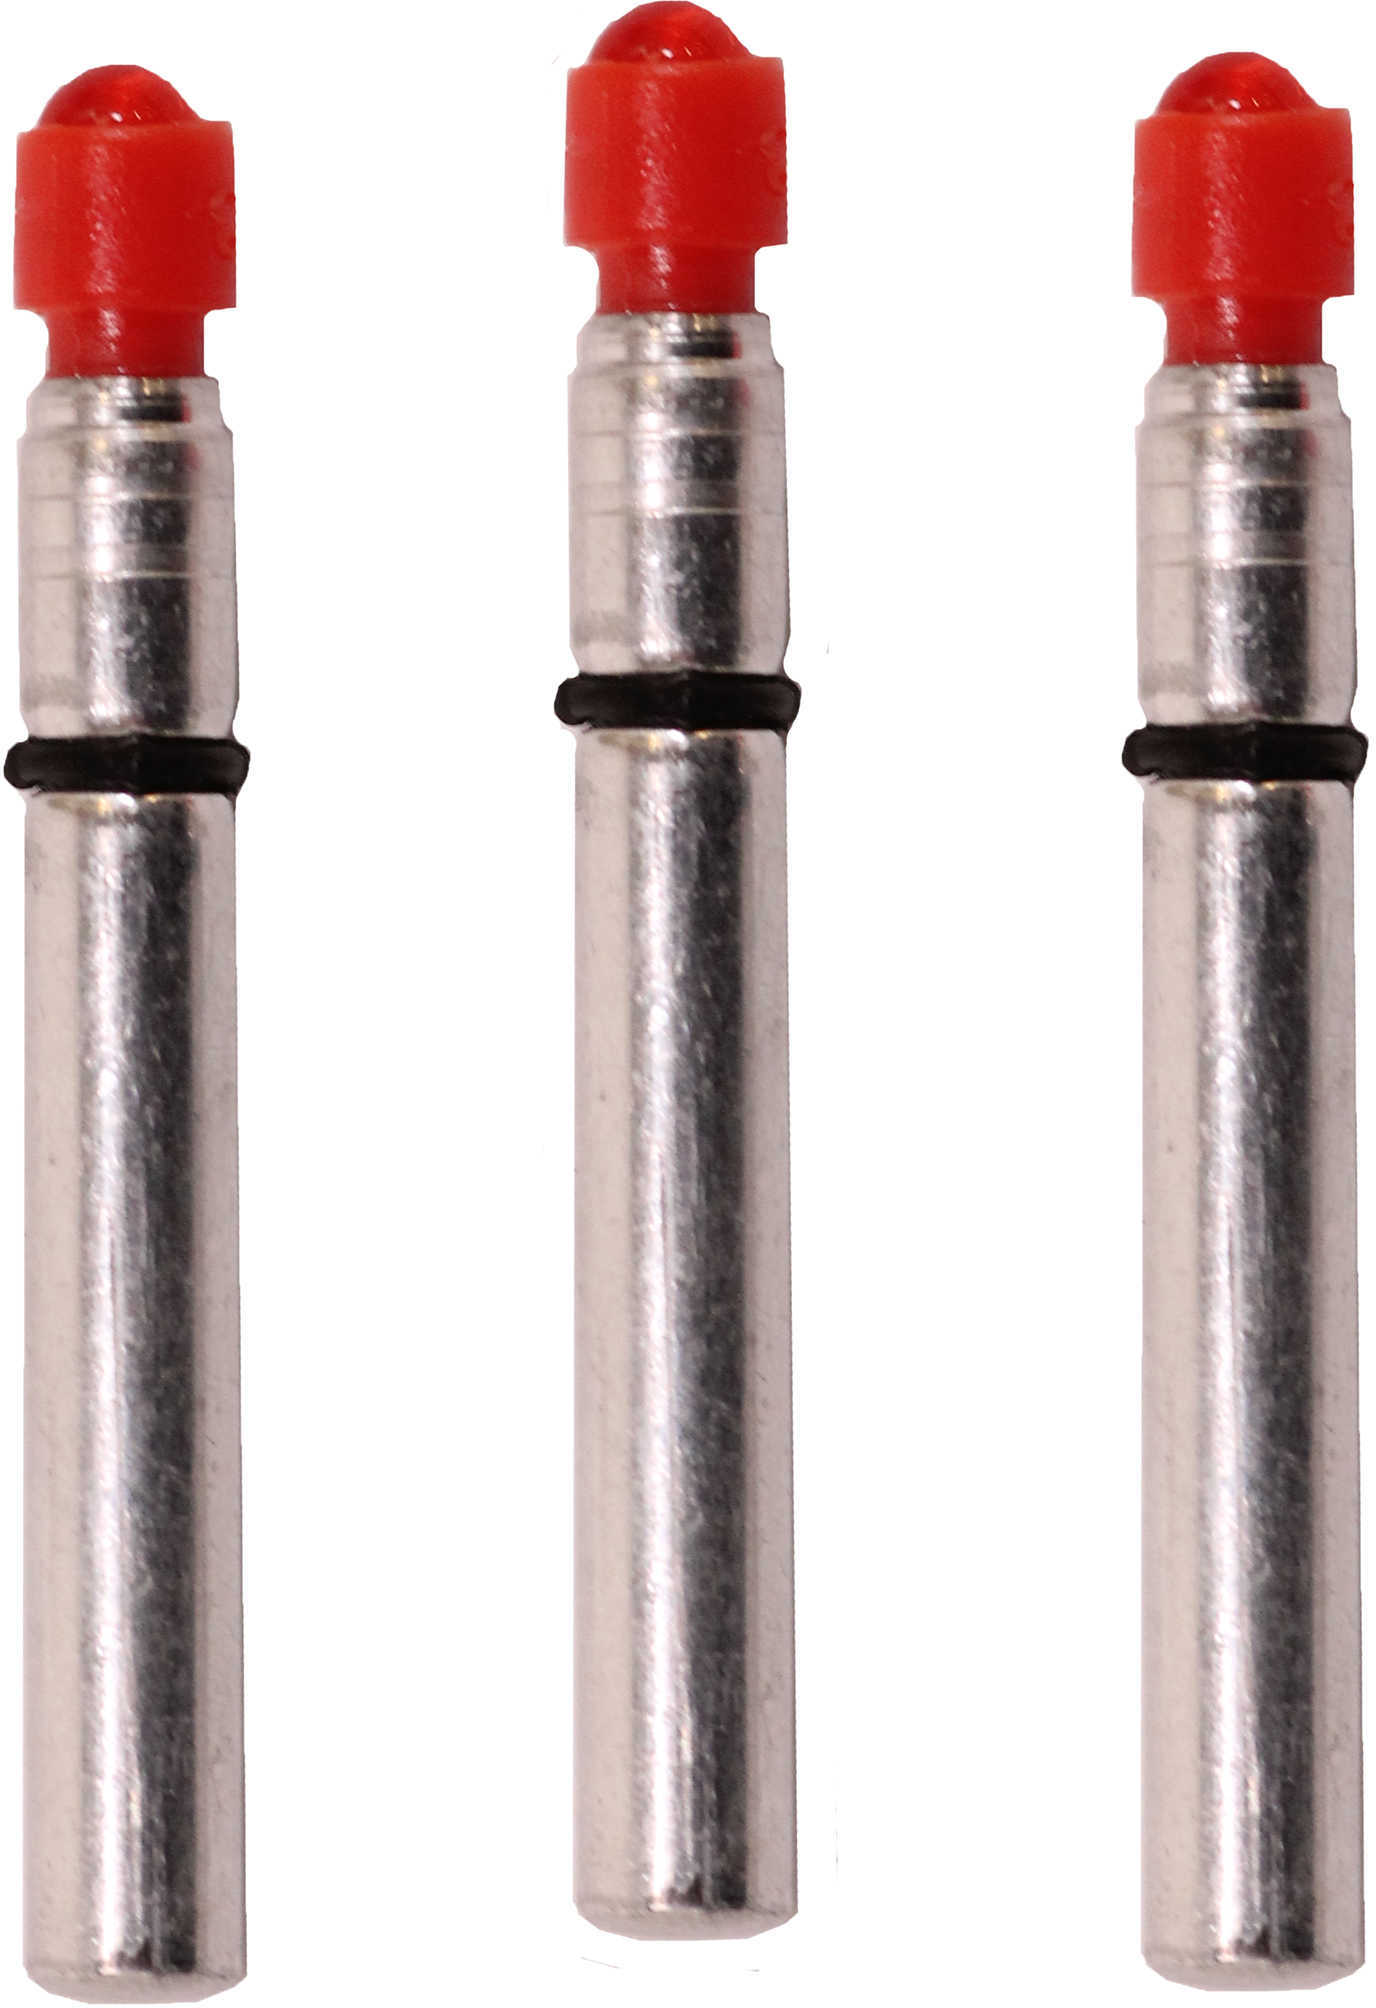 TenPoint Omni Brite Lite Stick Red 3 pk. Model: HEA-310.3